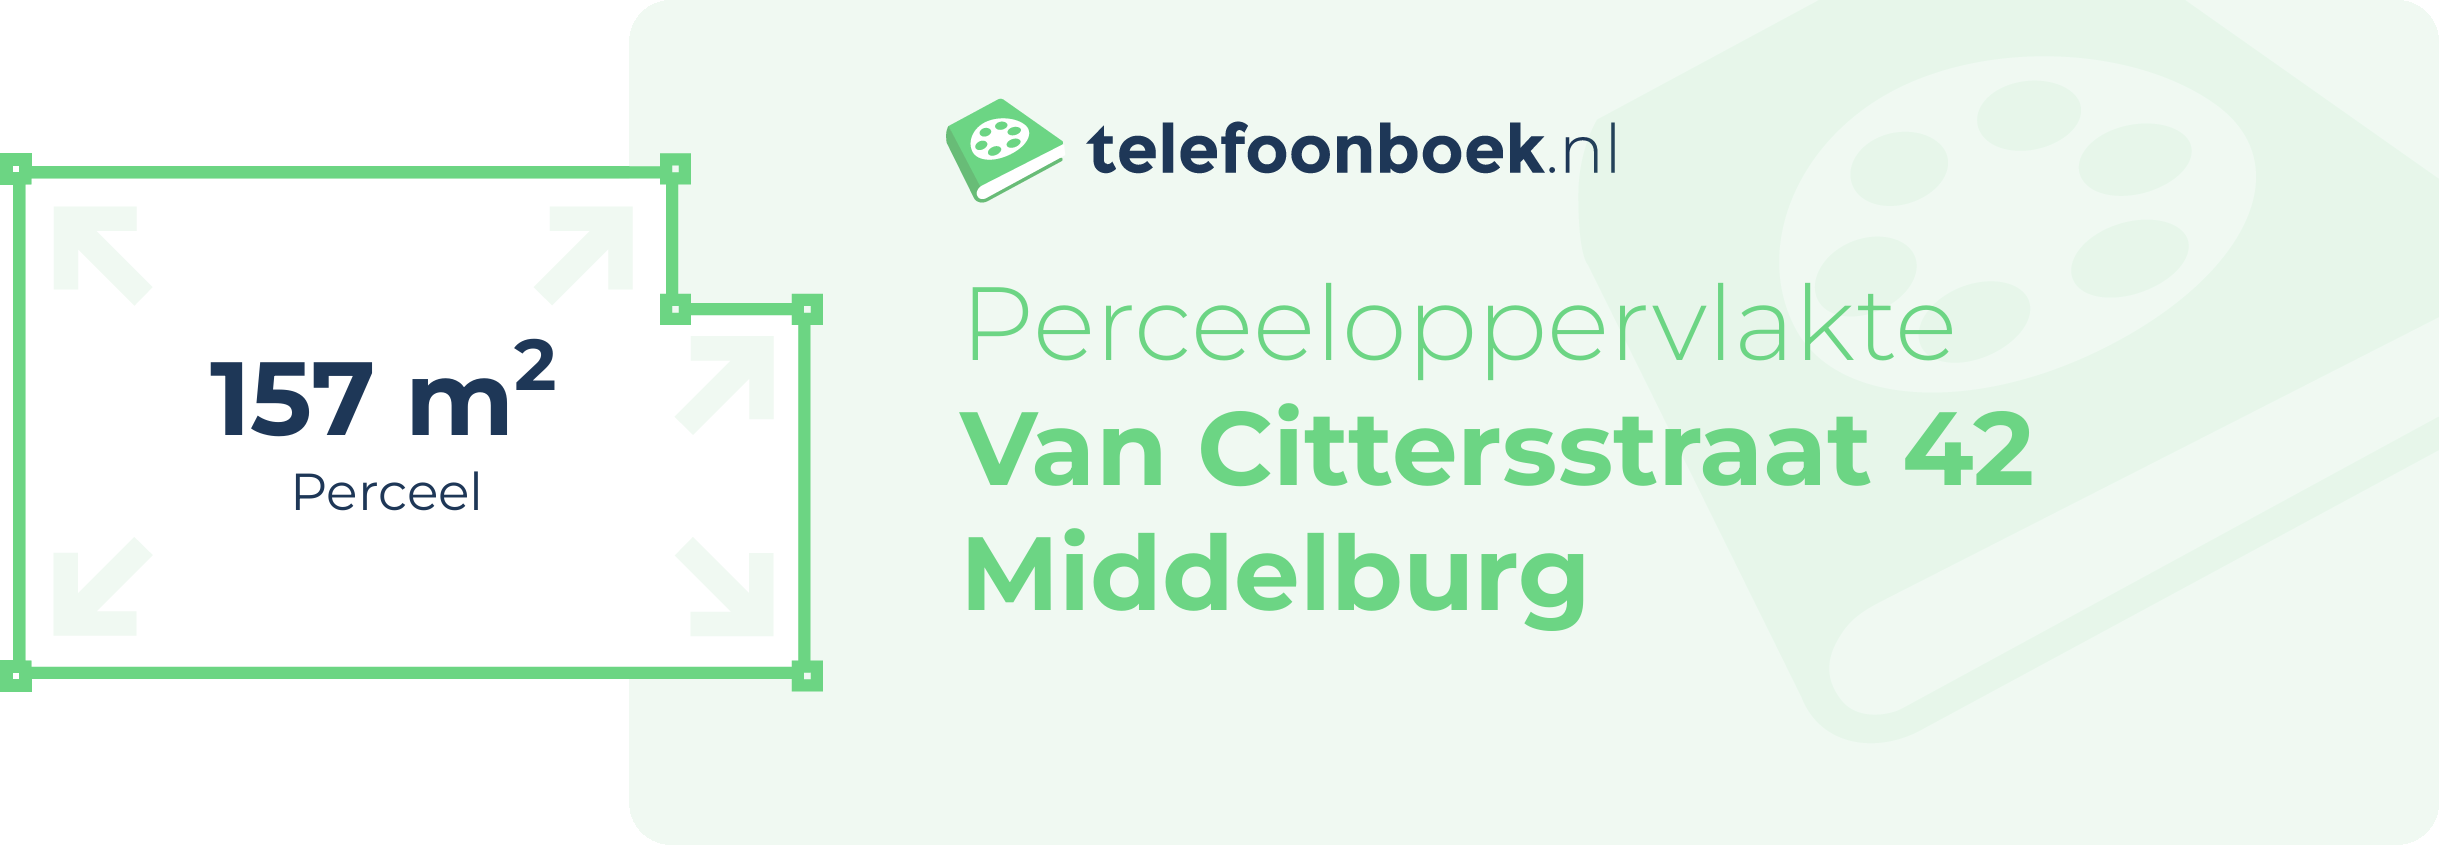 Perceeloppervlakte Van Cittersstraat 42 Middelburg